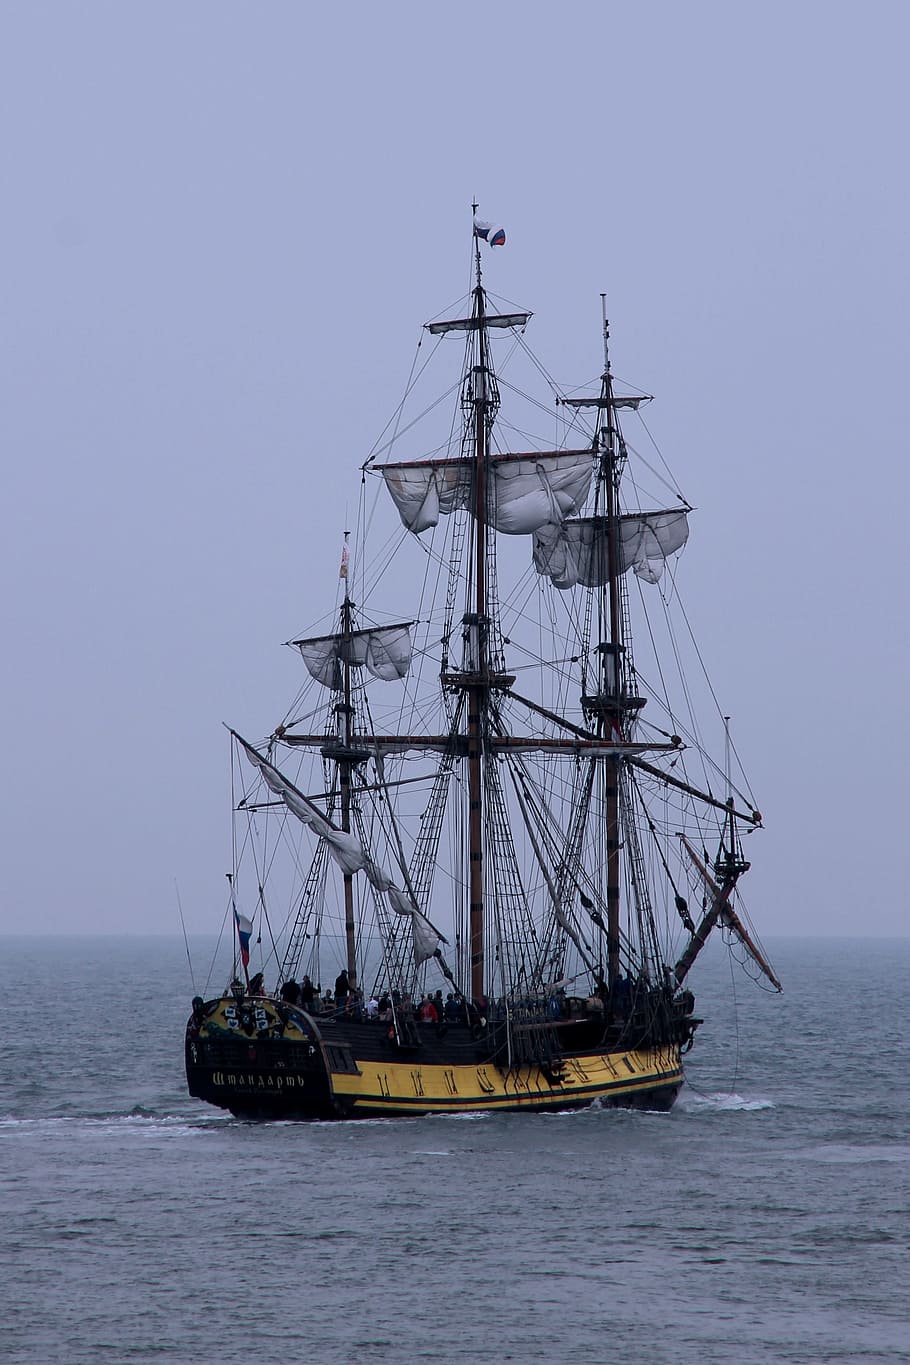 Sailing Vessel, Ship, Water, sail, historically, sea, masts, clouds, sky, ocean